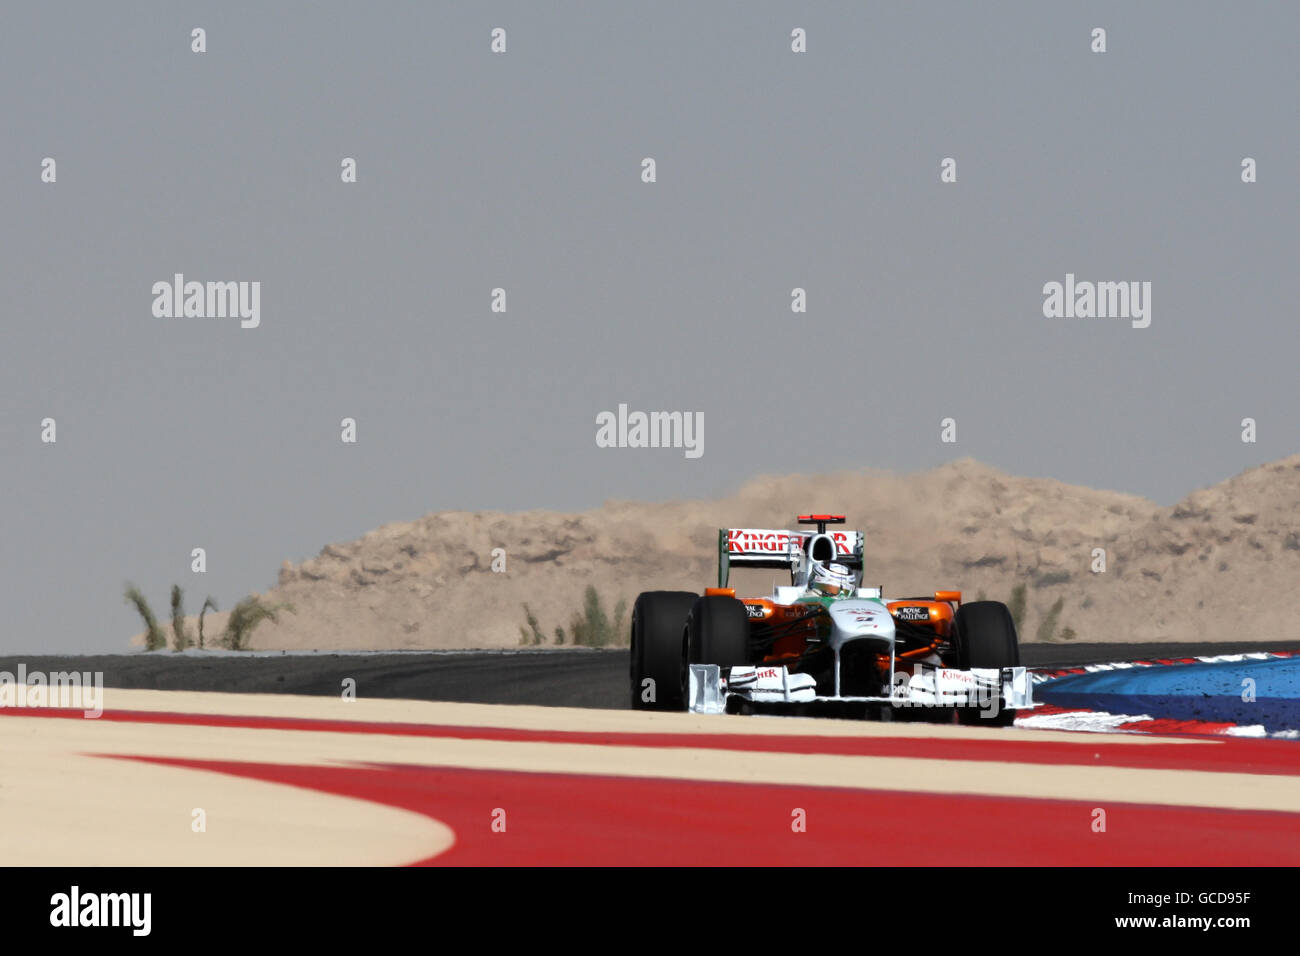 Motor Racing - Formula One World Championship - Bahrain Grand Prix - Qualifying - Bahrain International Circuit. Force India's Adrian Sutil during Qualifying at the Bahrain International Circuit in Sakhir, Bahrain. Stock Photo